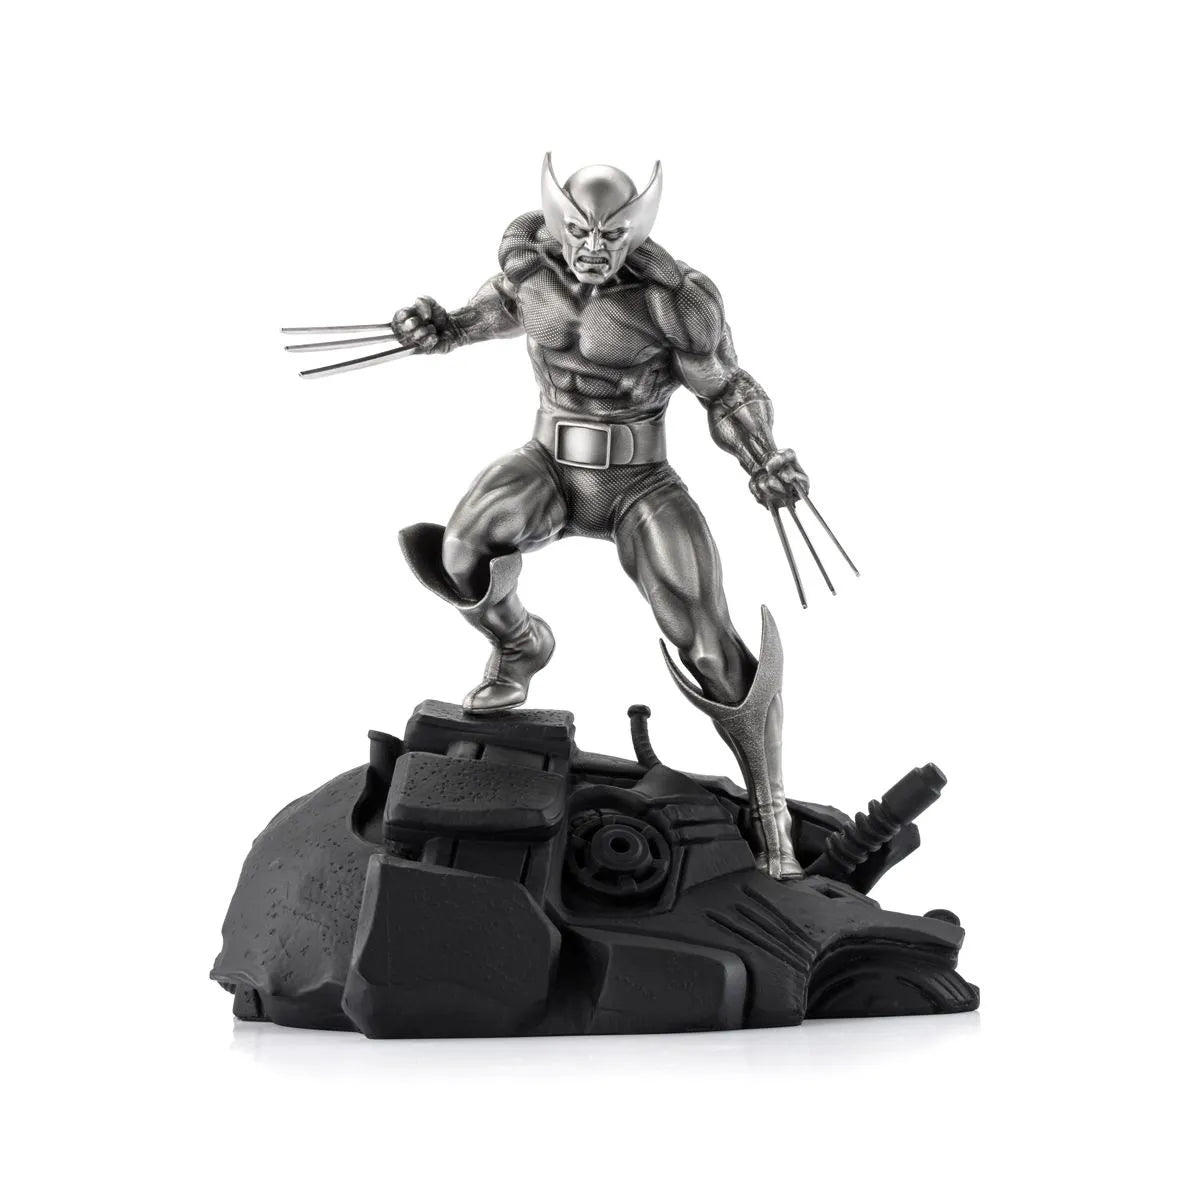 Wolverine Victorious Limited Edition Metal Figurine by Royal Selangor -Royal Selangor - India - www.superherotoystore.com